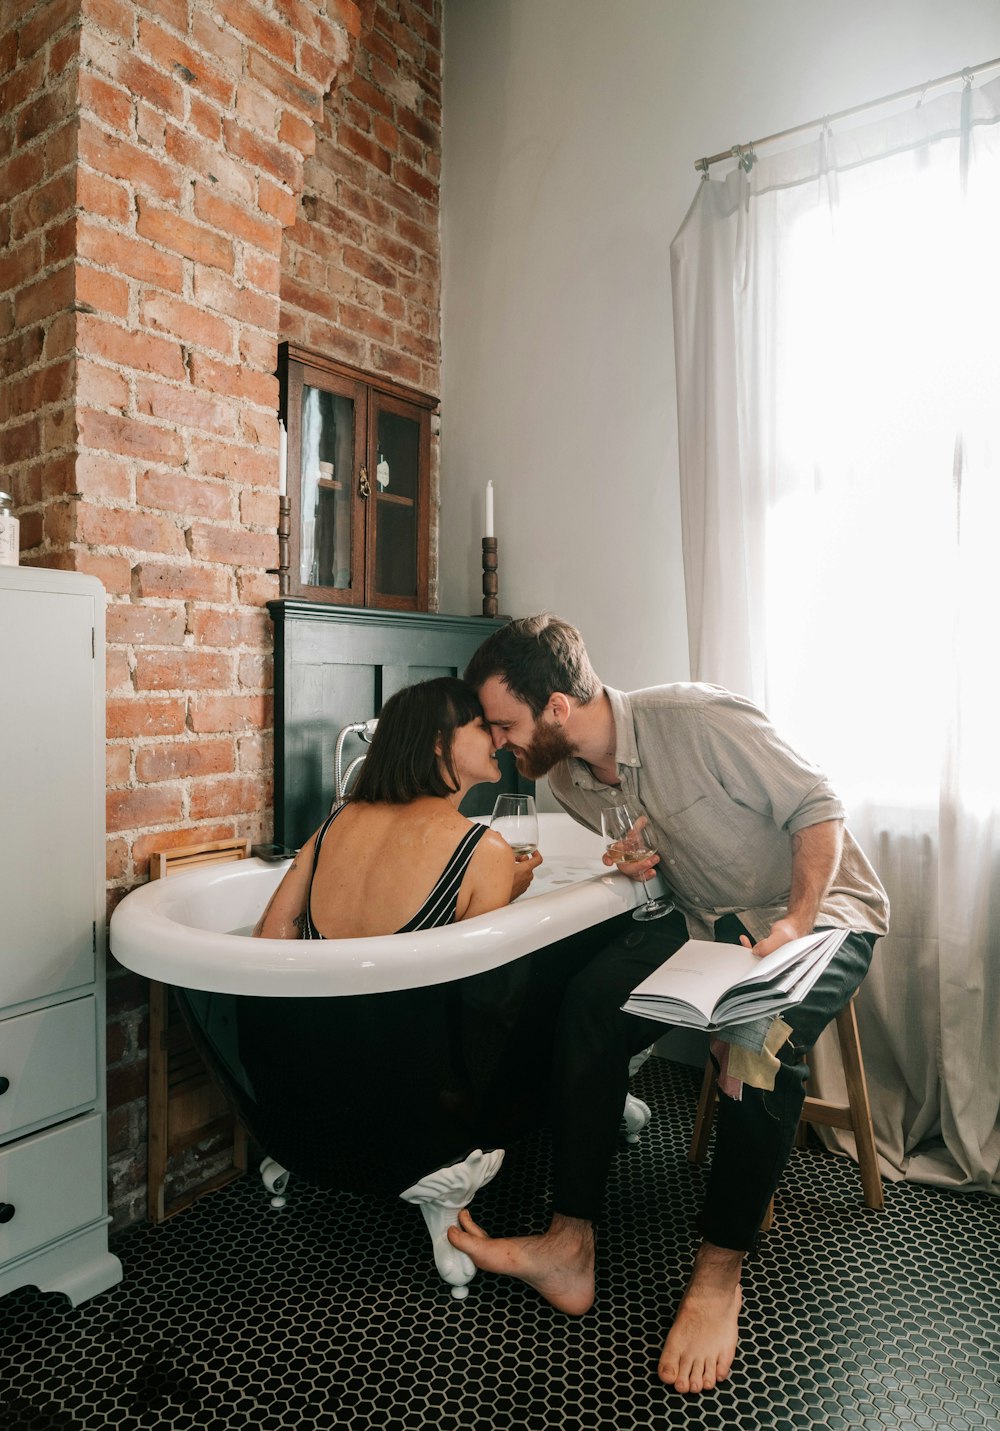 man in gray dress shirt kissing woman in black bikini on bathtub